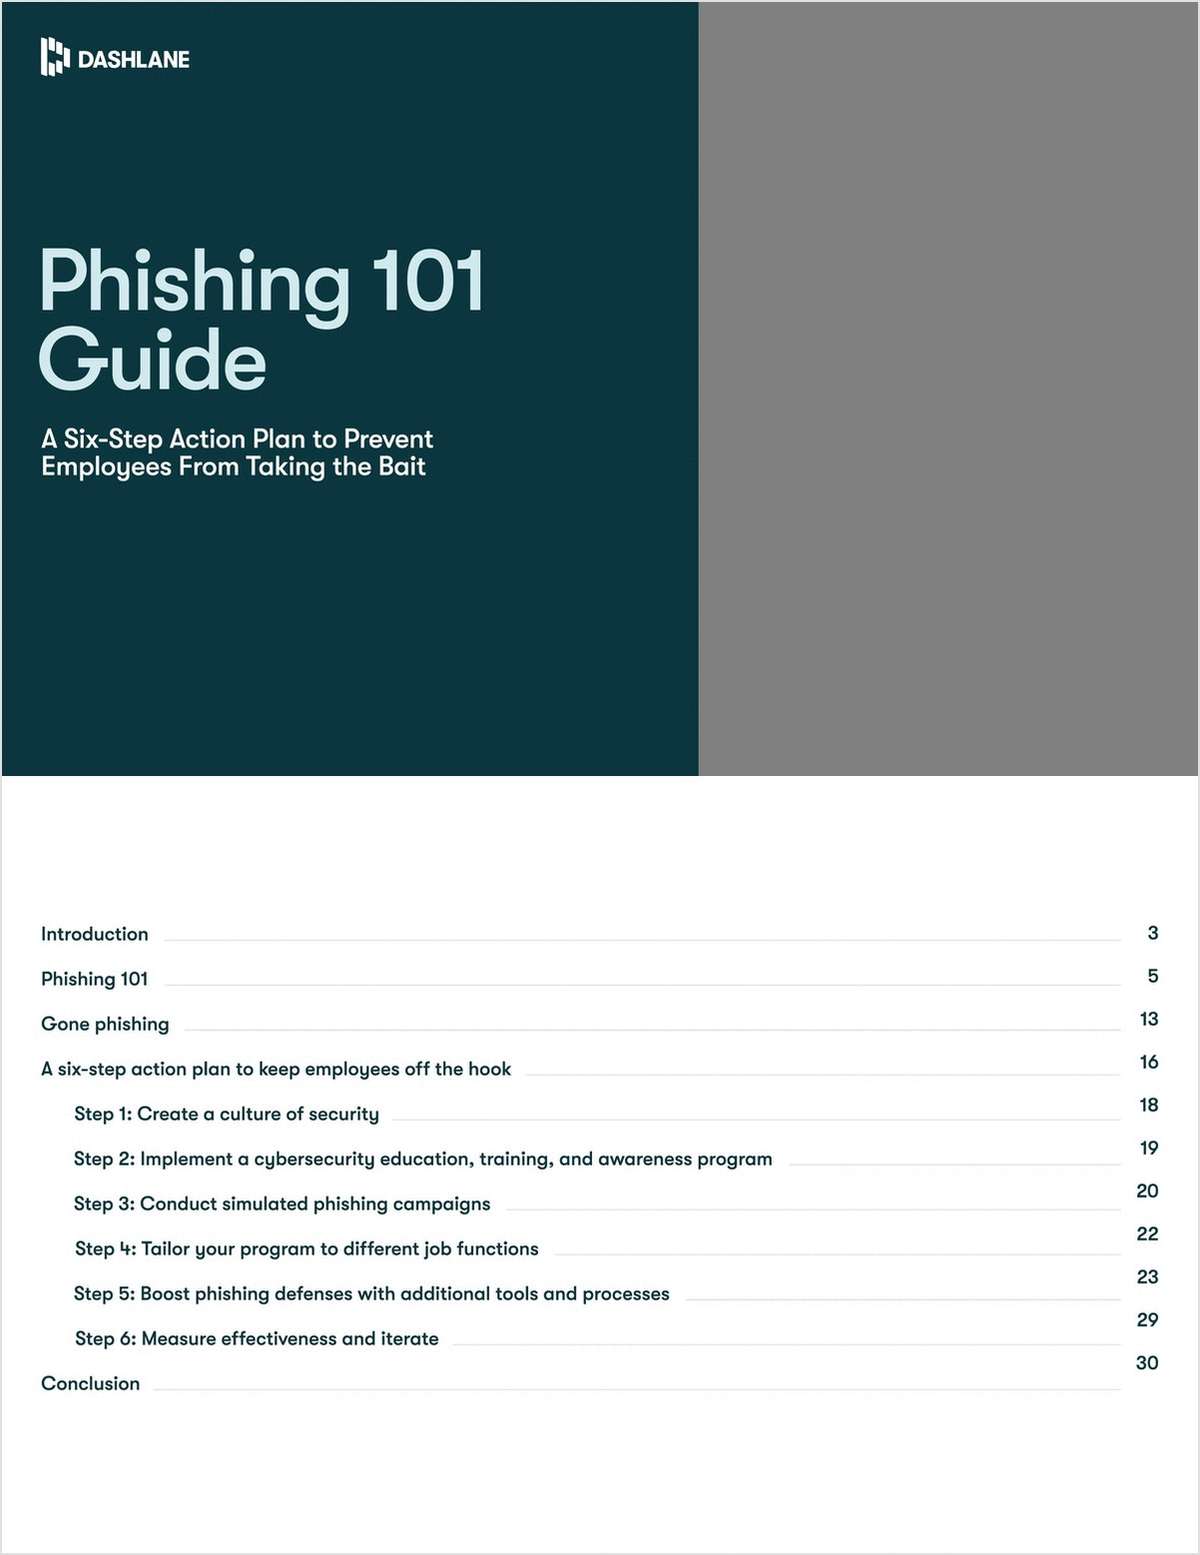 Phishing 101: A Six-Step Action Plan